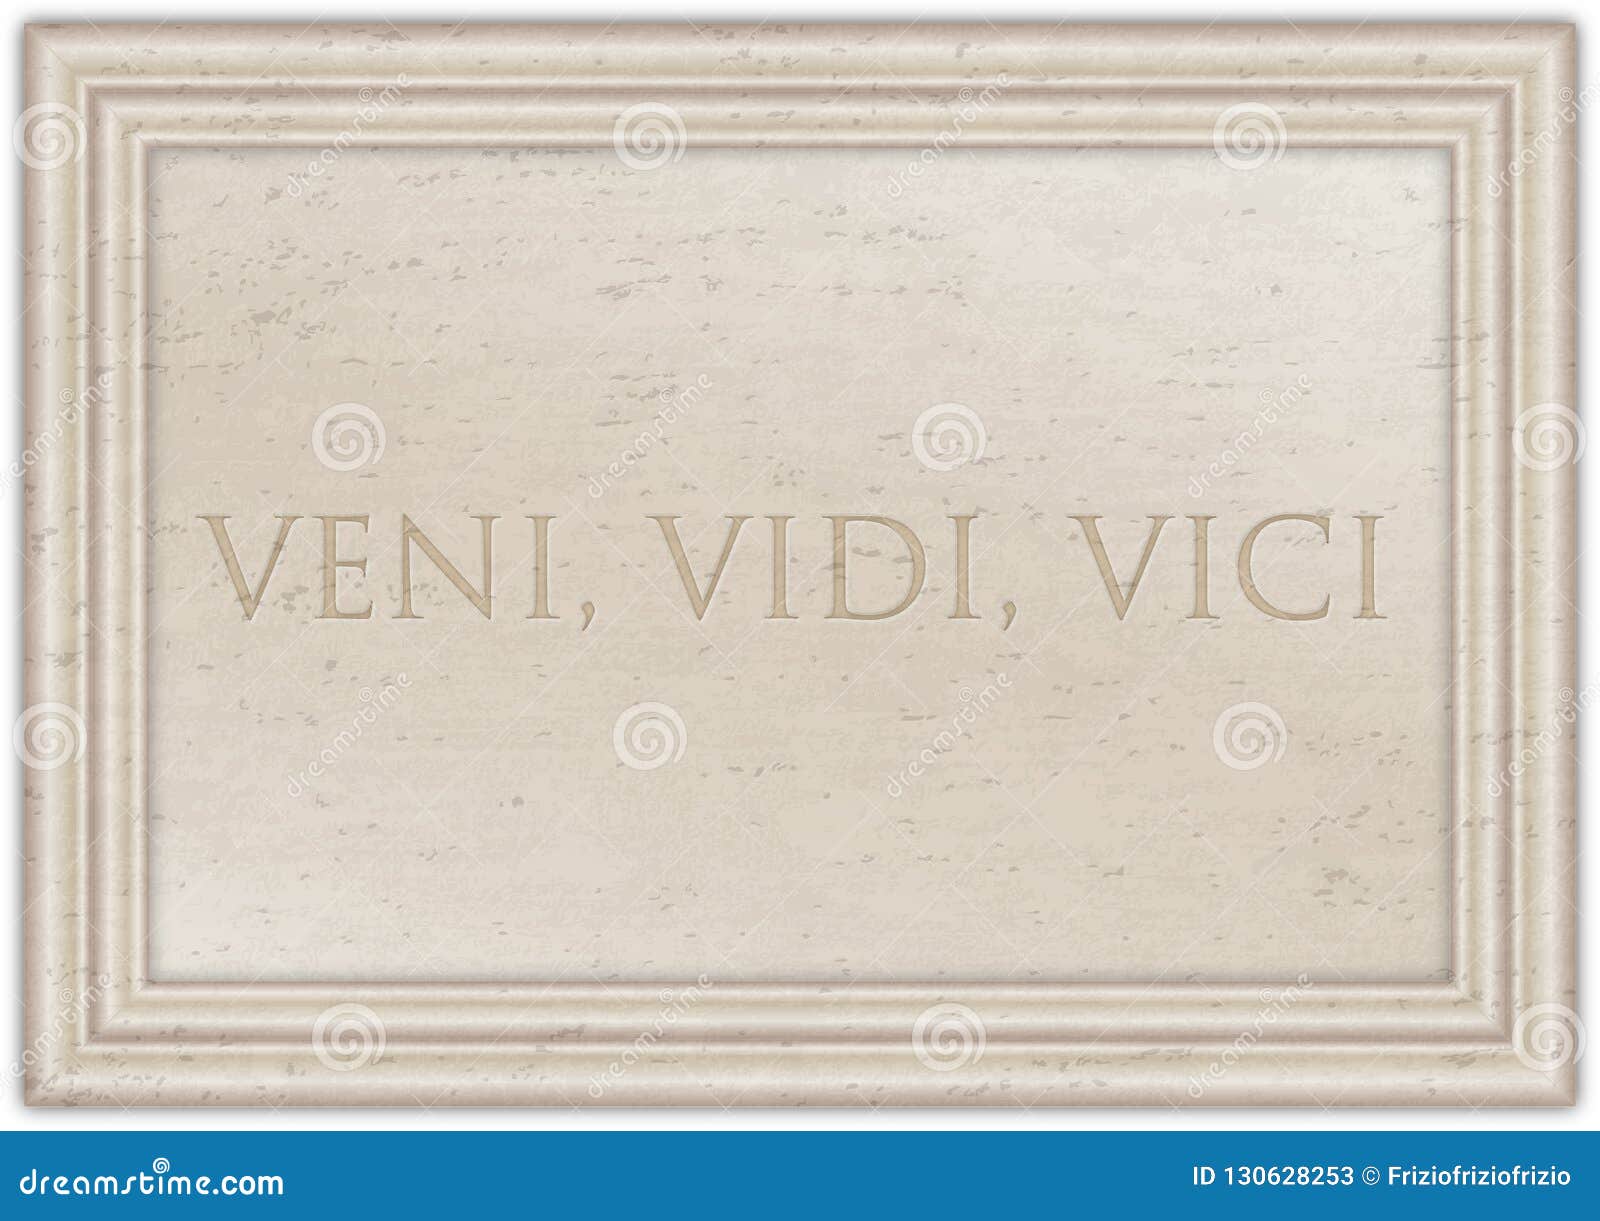 Veni vidi vici latin quote poster Royalty Free Vector Image